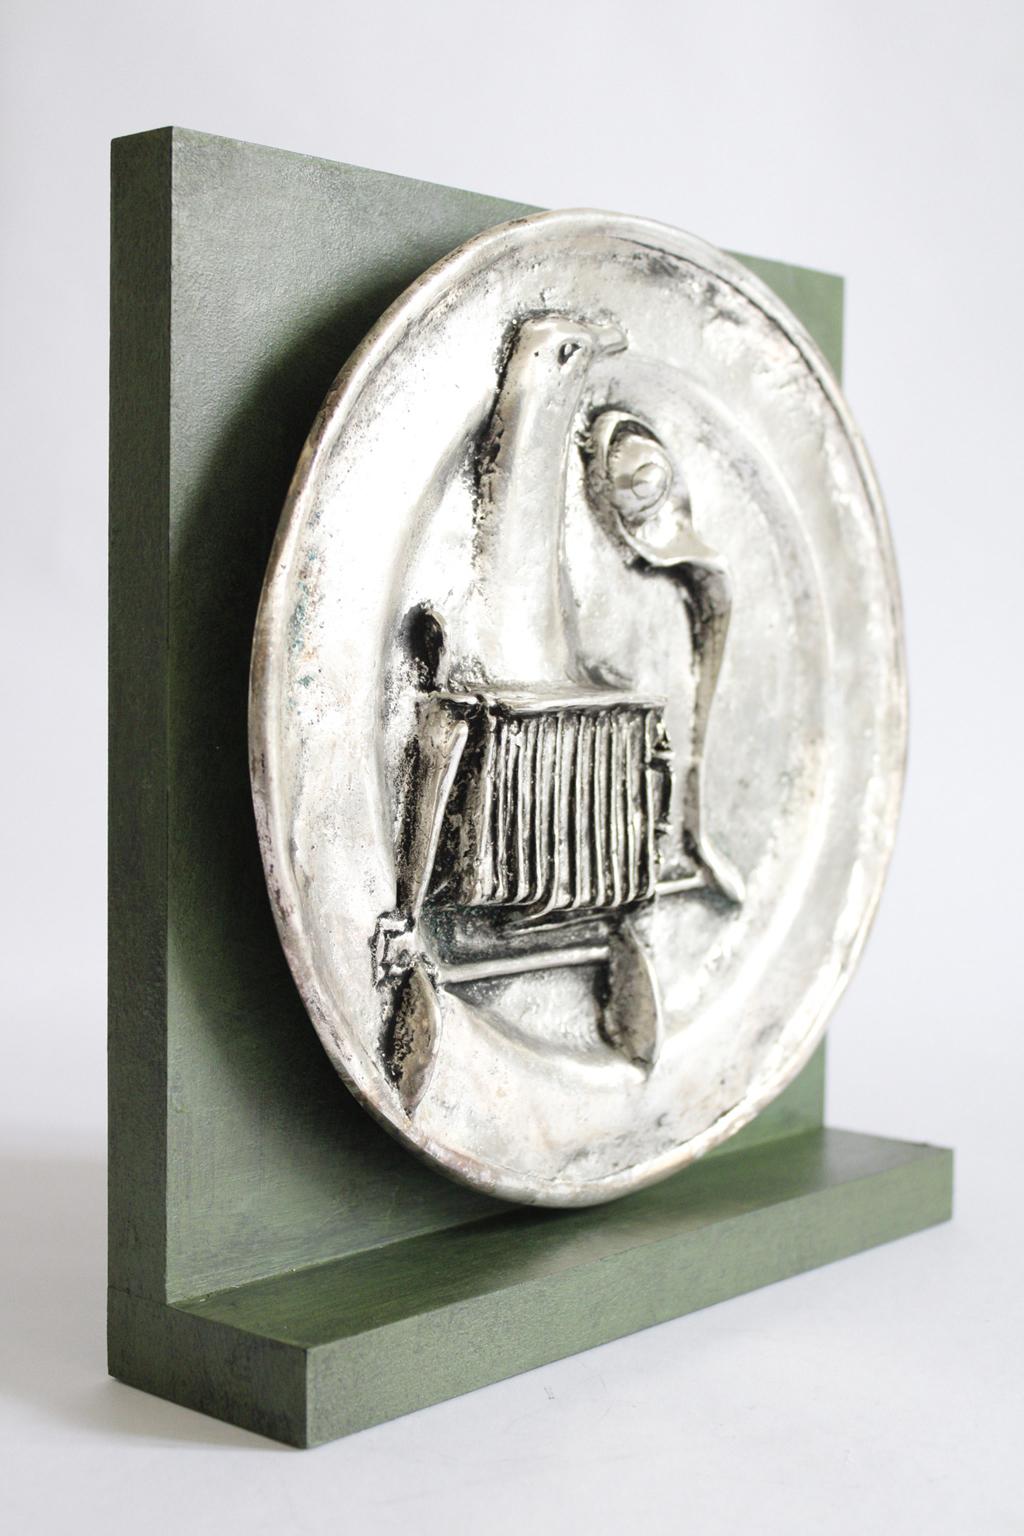 Appearances Italien 1980 Mehrfach versilberte Bronze auf bemaltem Holz – Sculpture von Novello Finotti